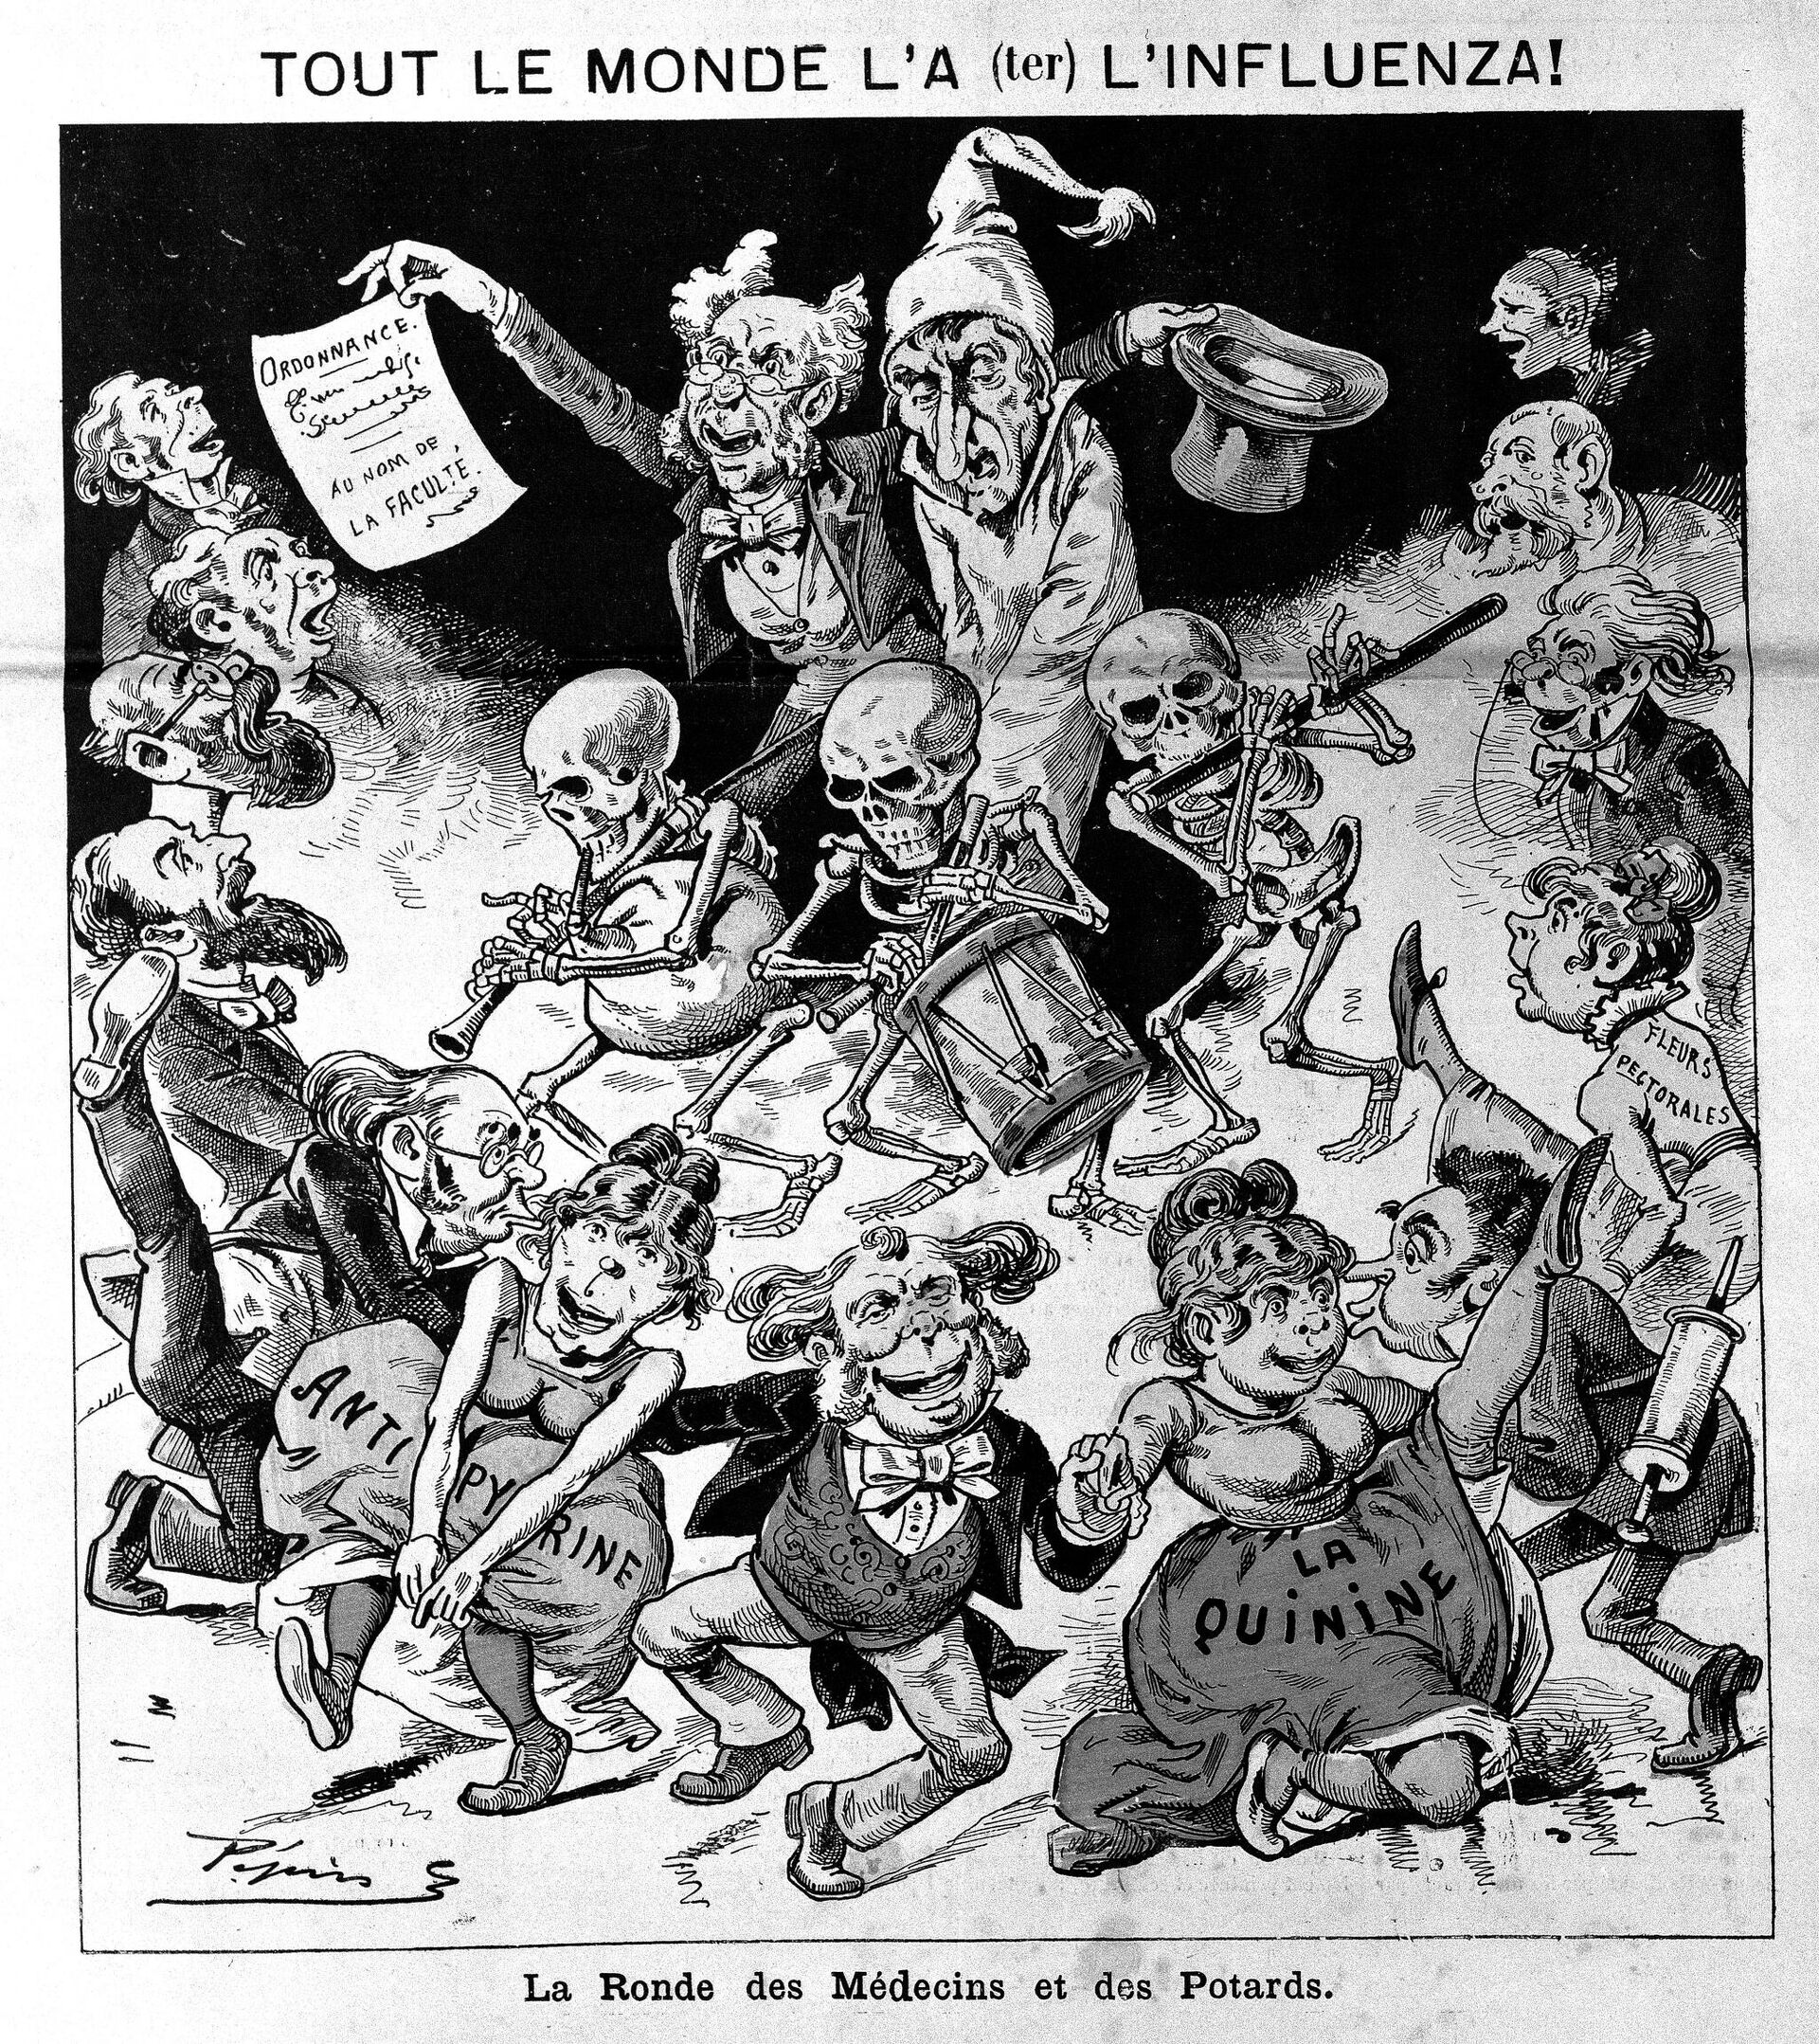 Пандемия гриппа (1889–1890), иллюстрация  - Sputnik Таджикистан, 1920, 17.02.2022